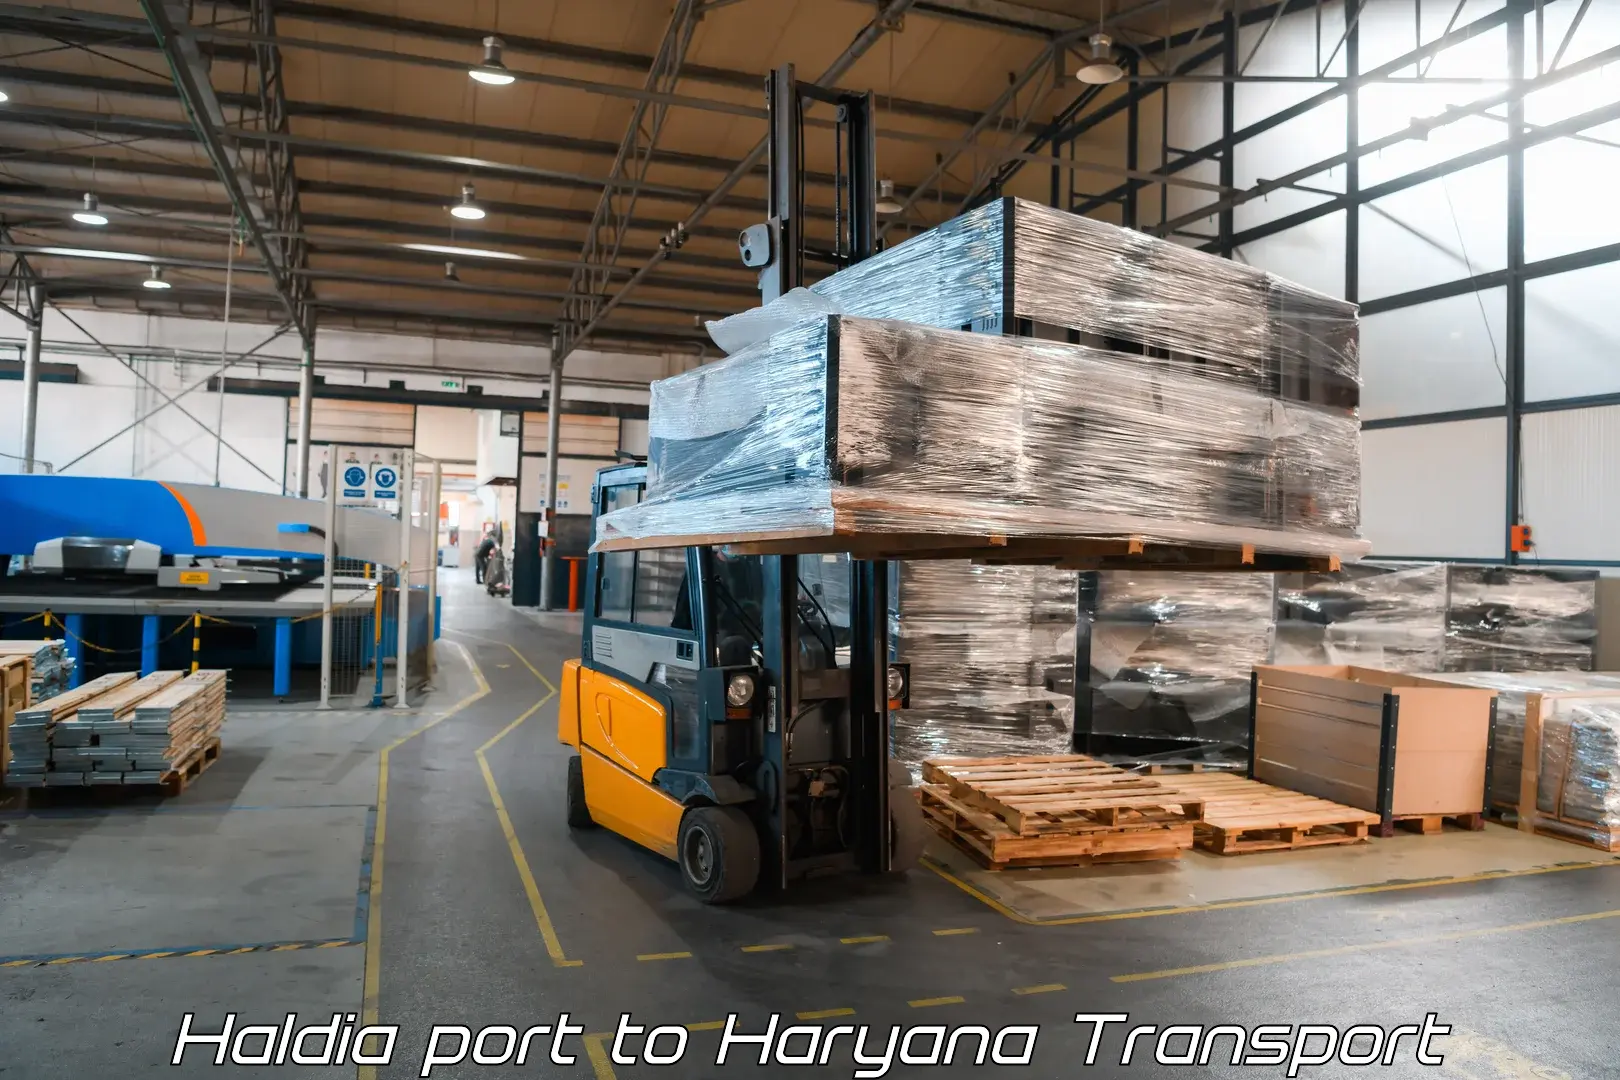 Transport shared services Haldia port to Bilaspur Haryana